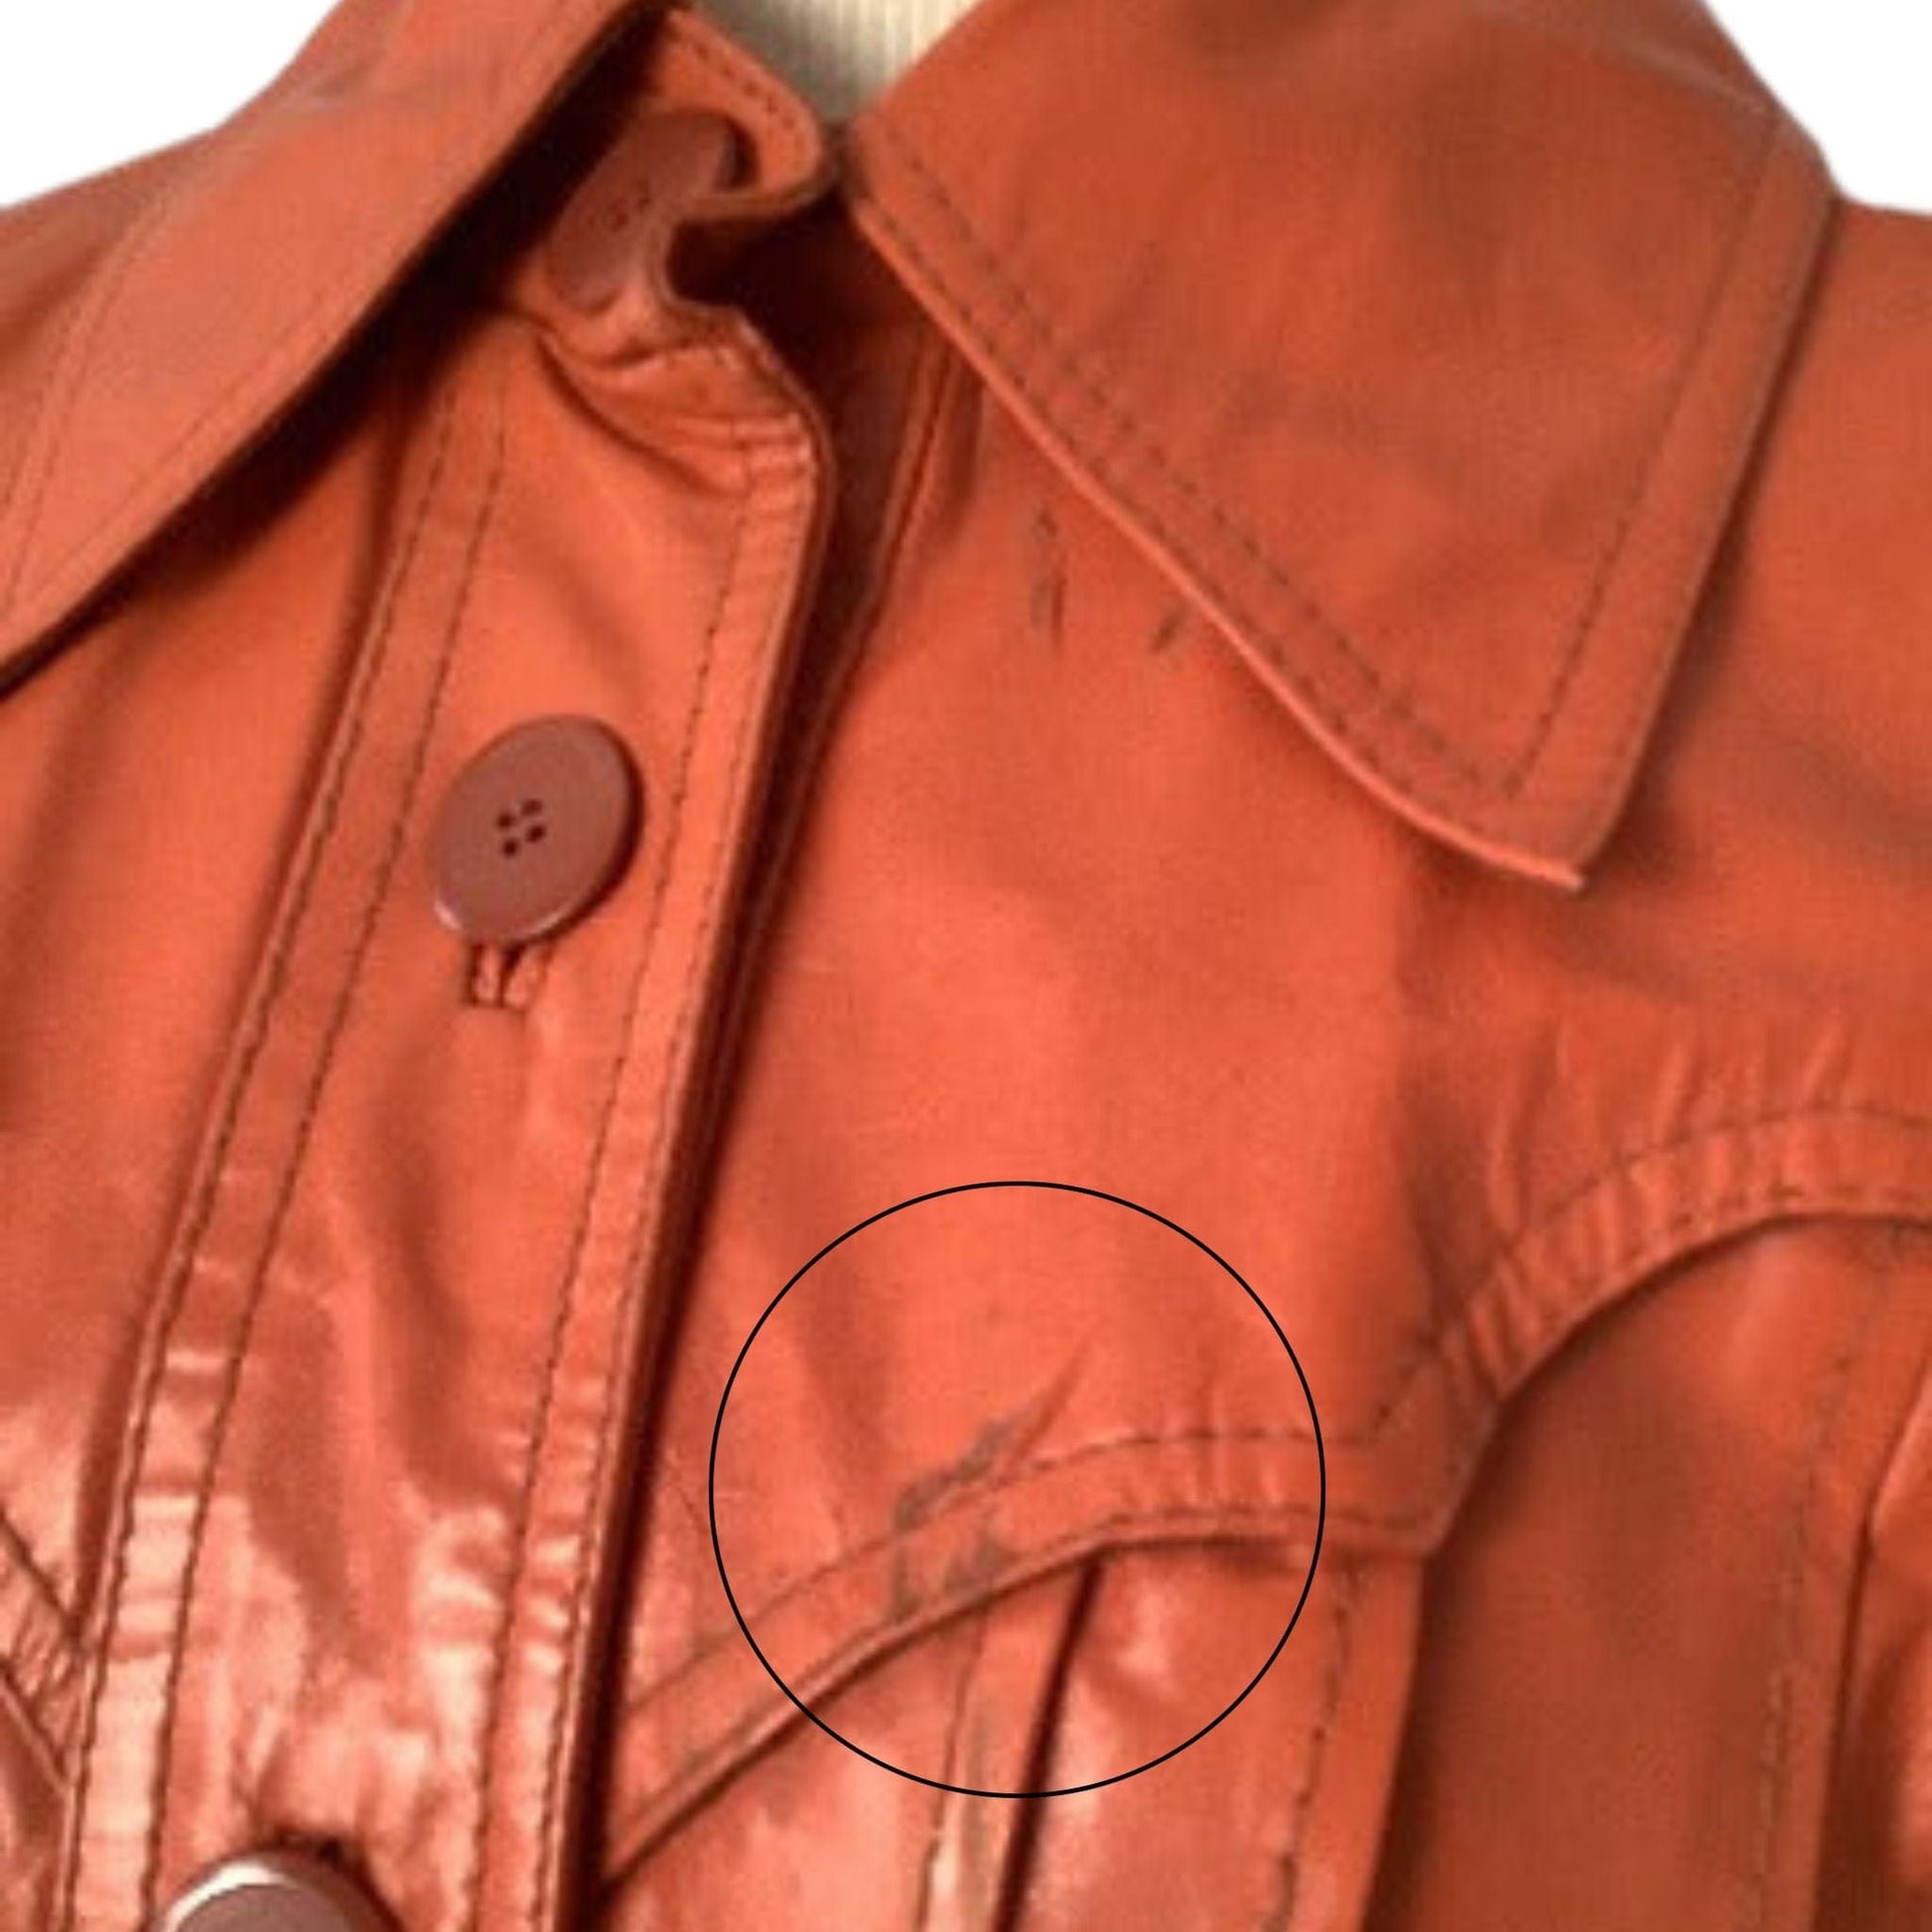 Orange Leather Jacket Small / Orange / Vintage 1970s